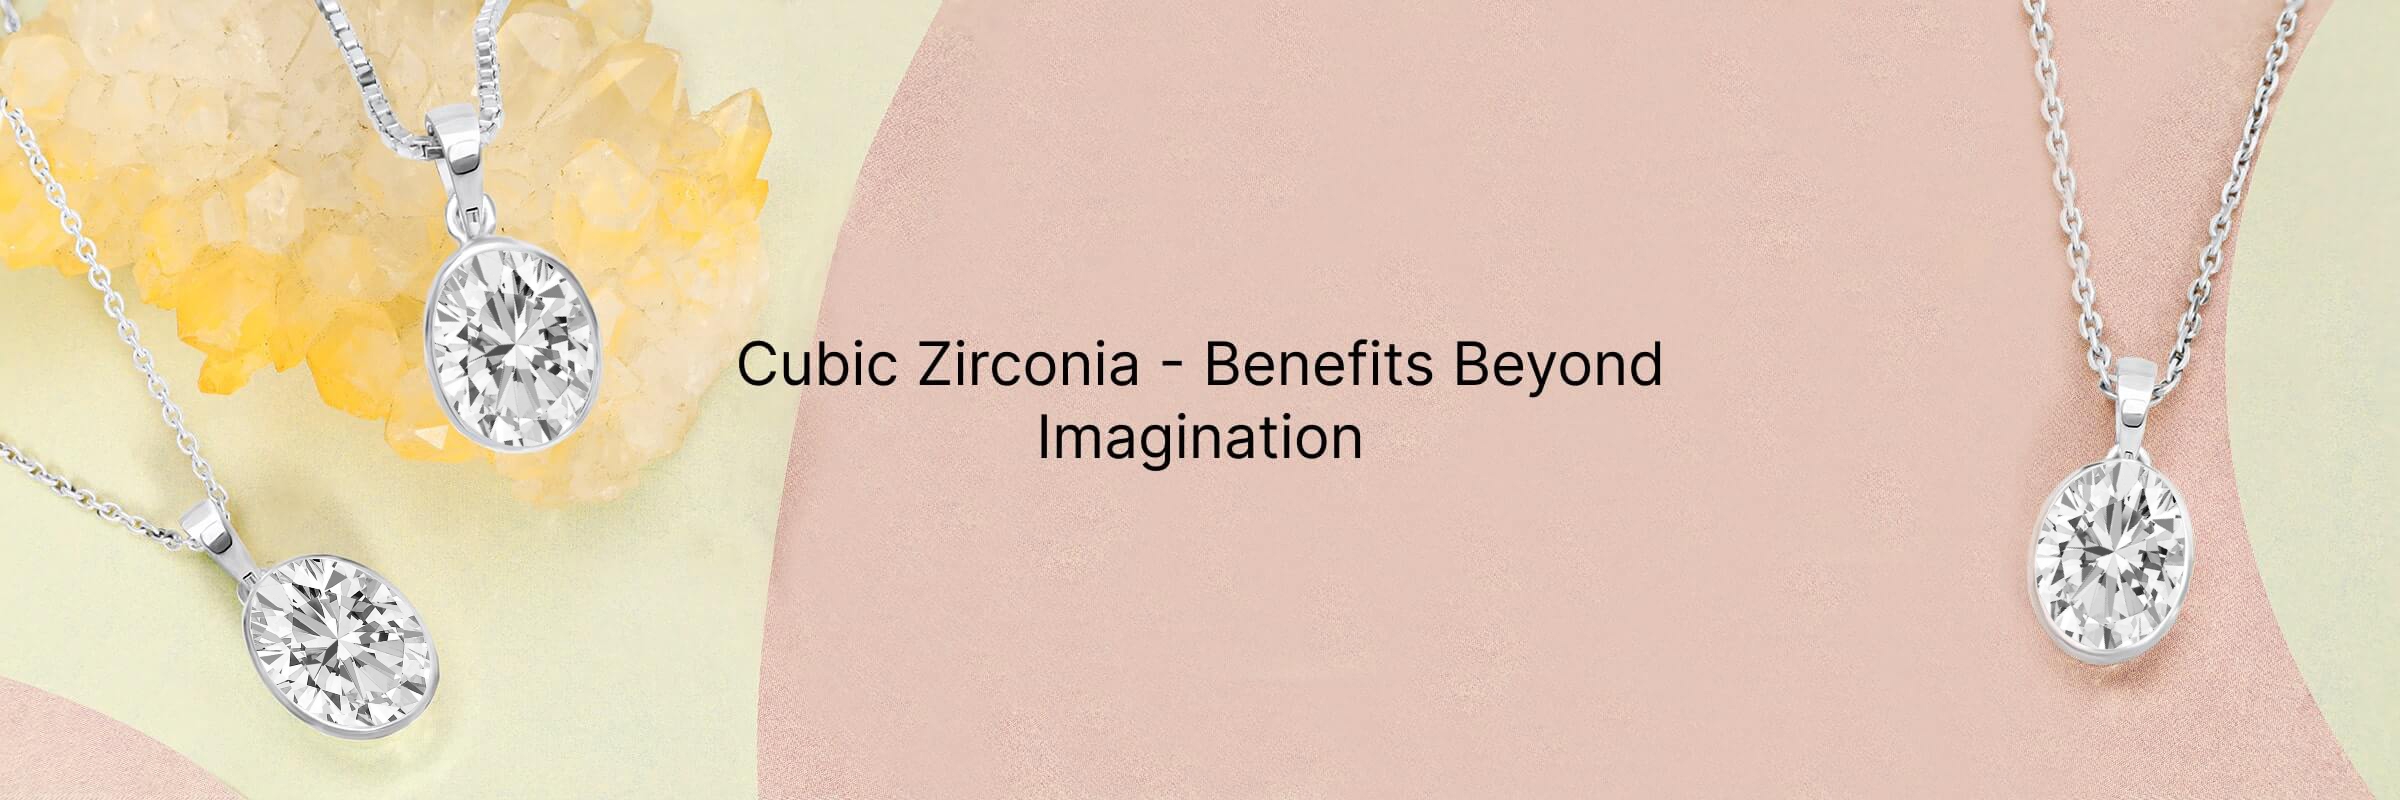 The benefits of using cubic zirconia